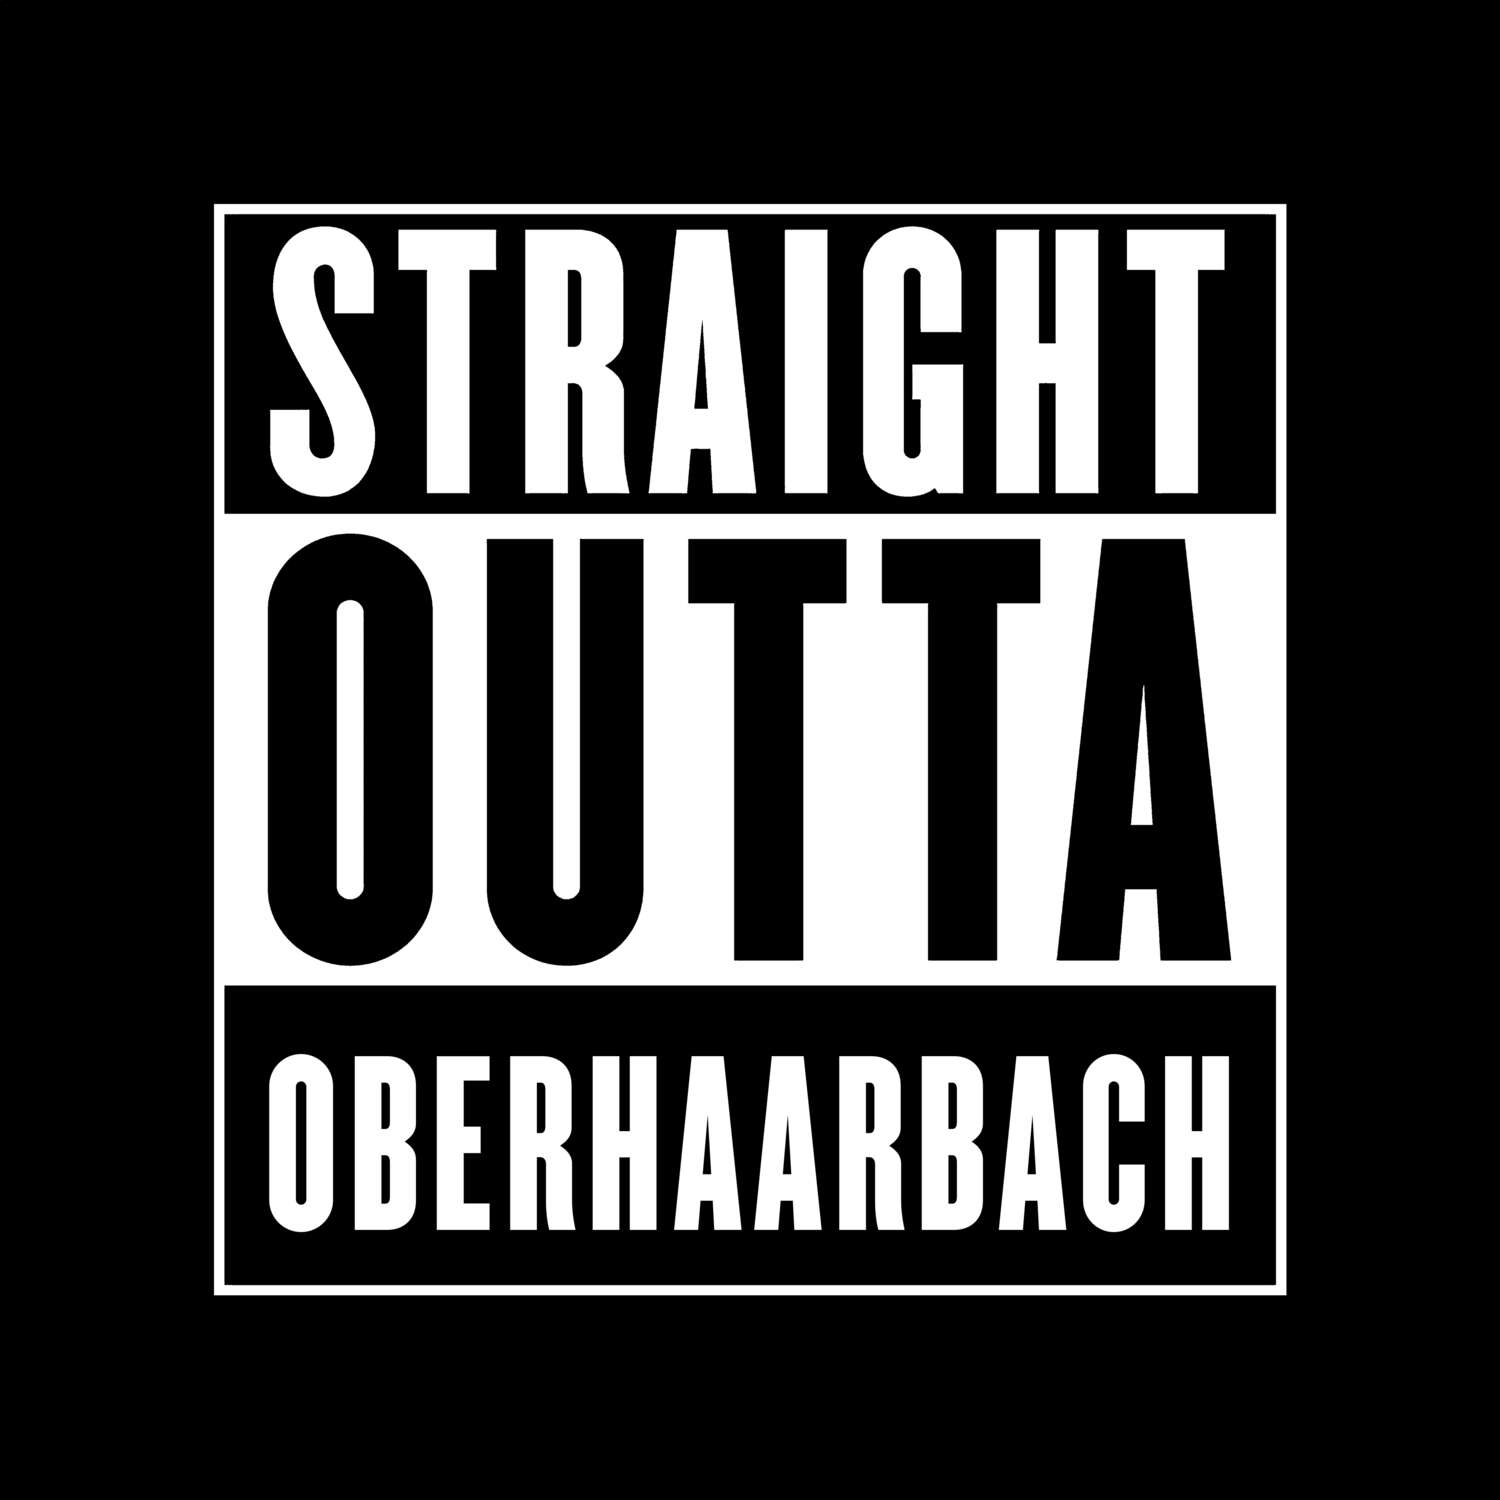 Oberhaarbach T-Shirt »Straight Outta«